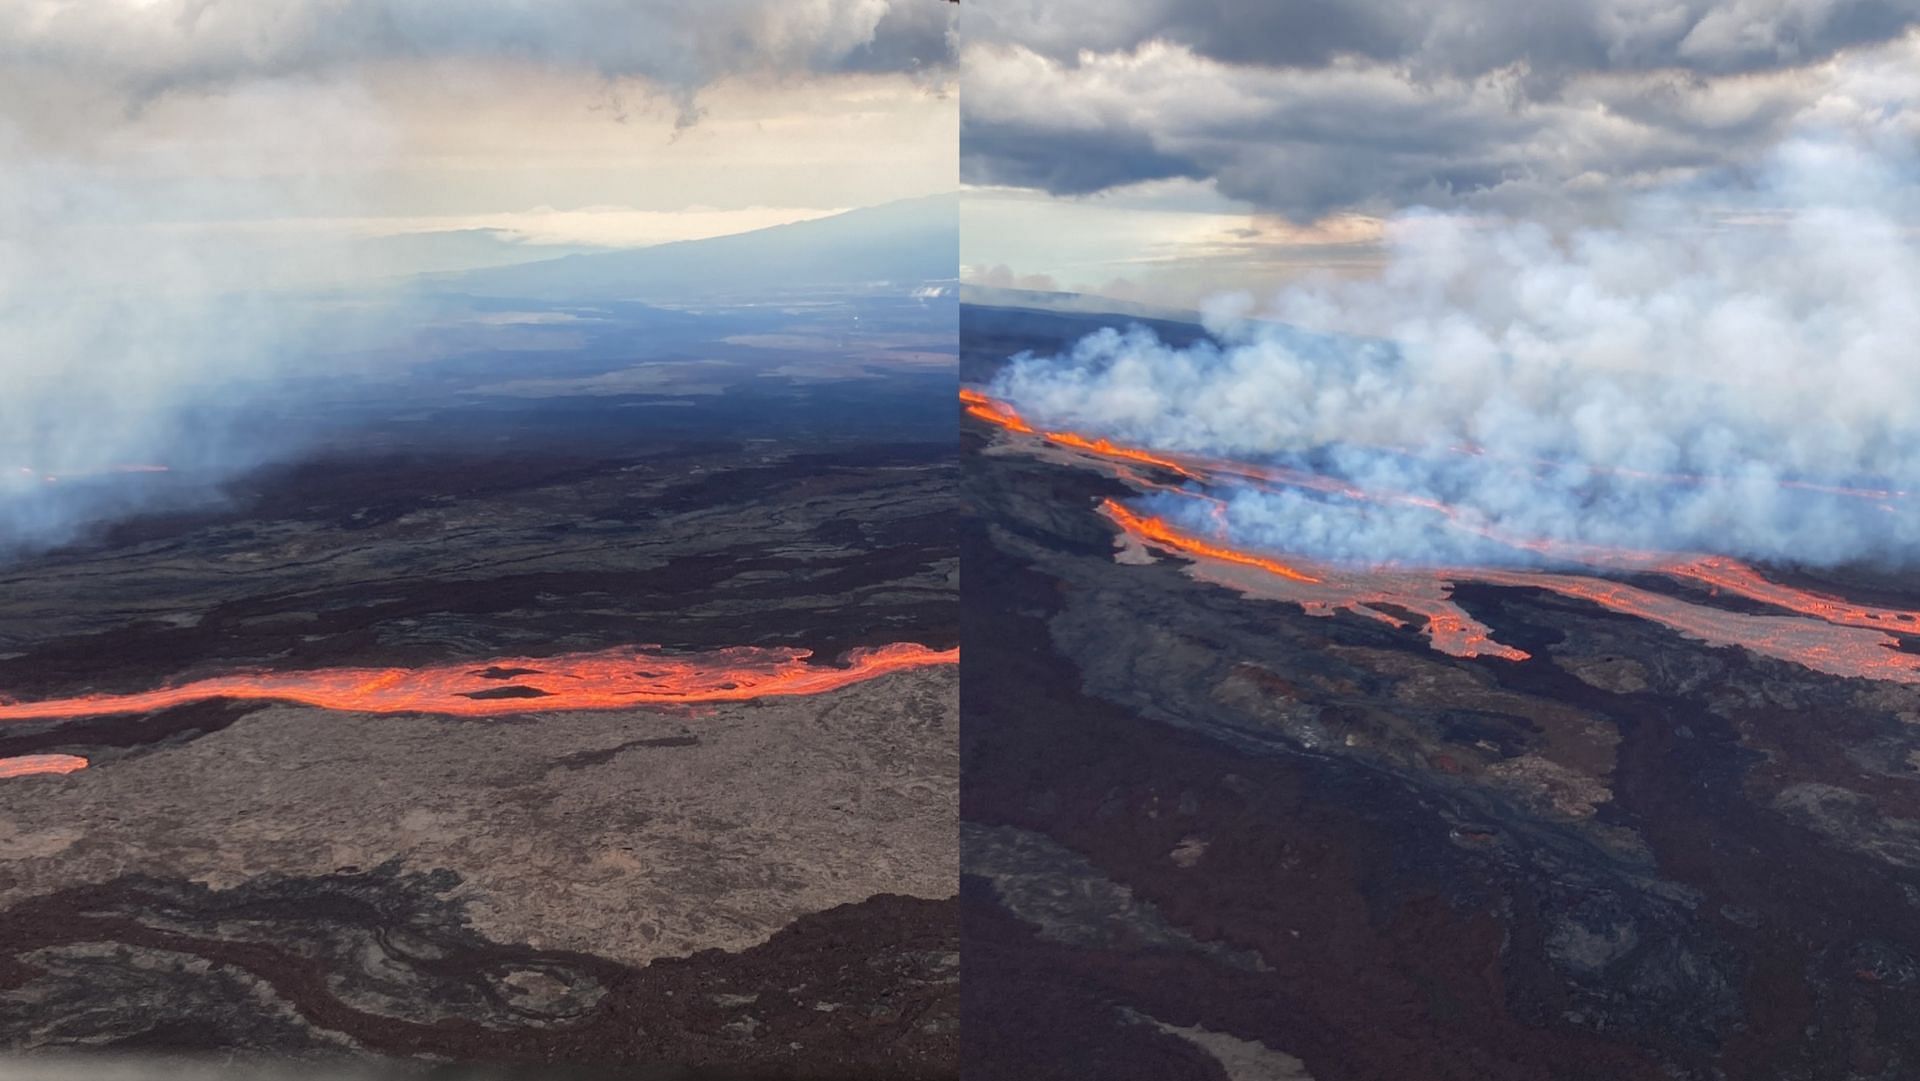 Volcano - Terraria Wiki